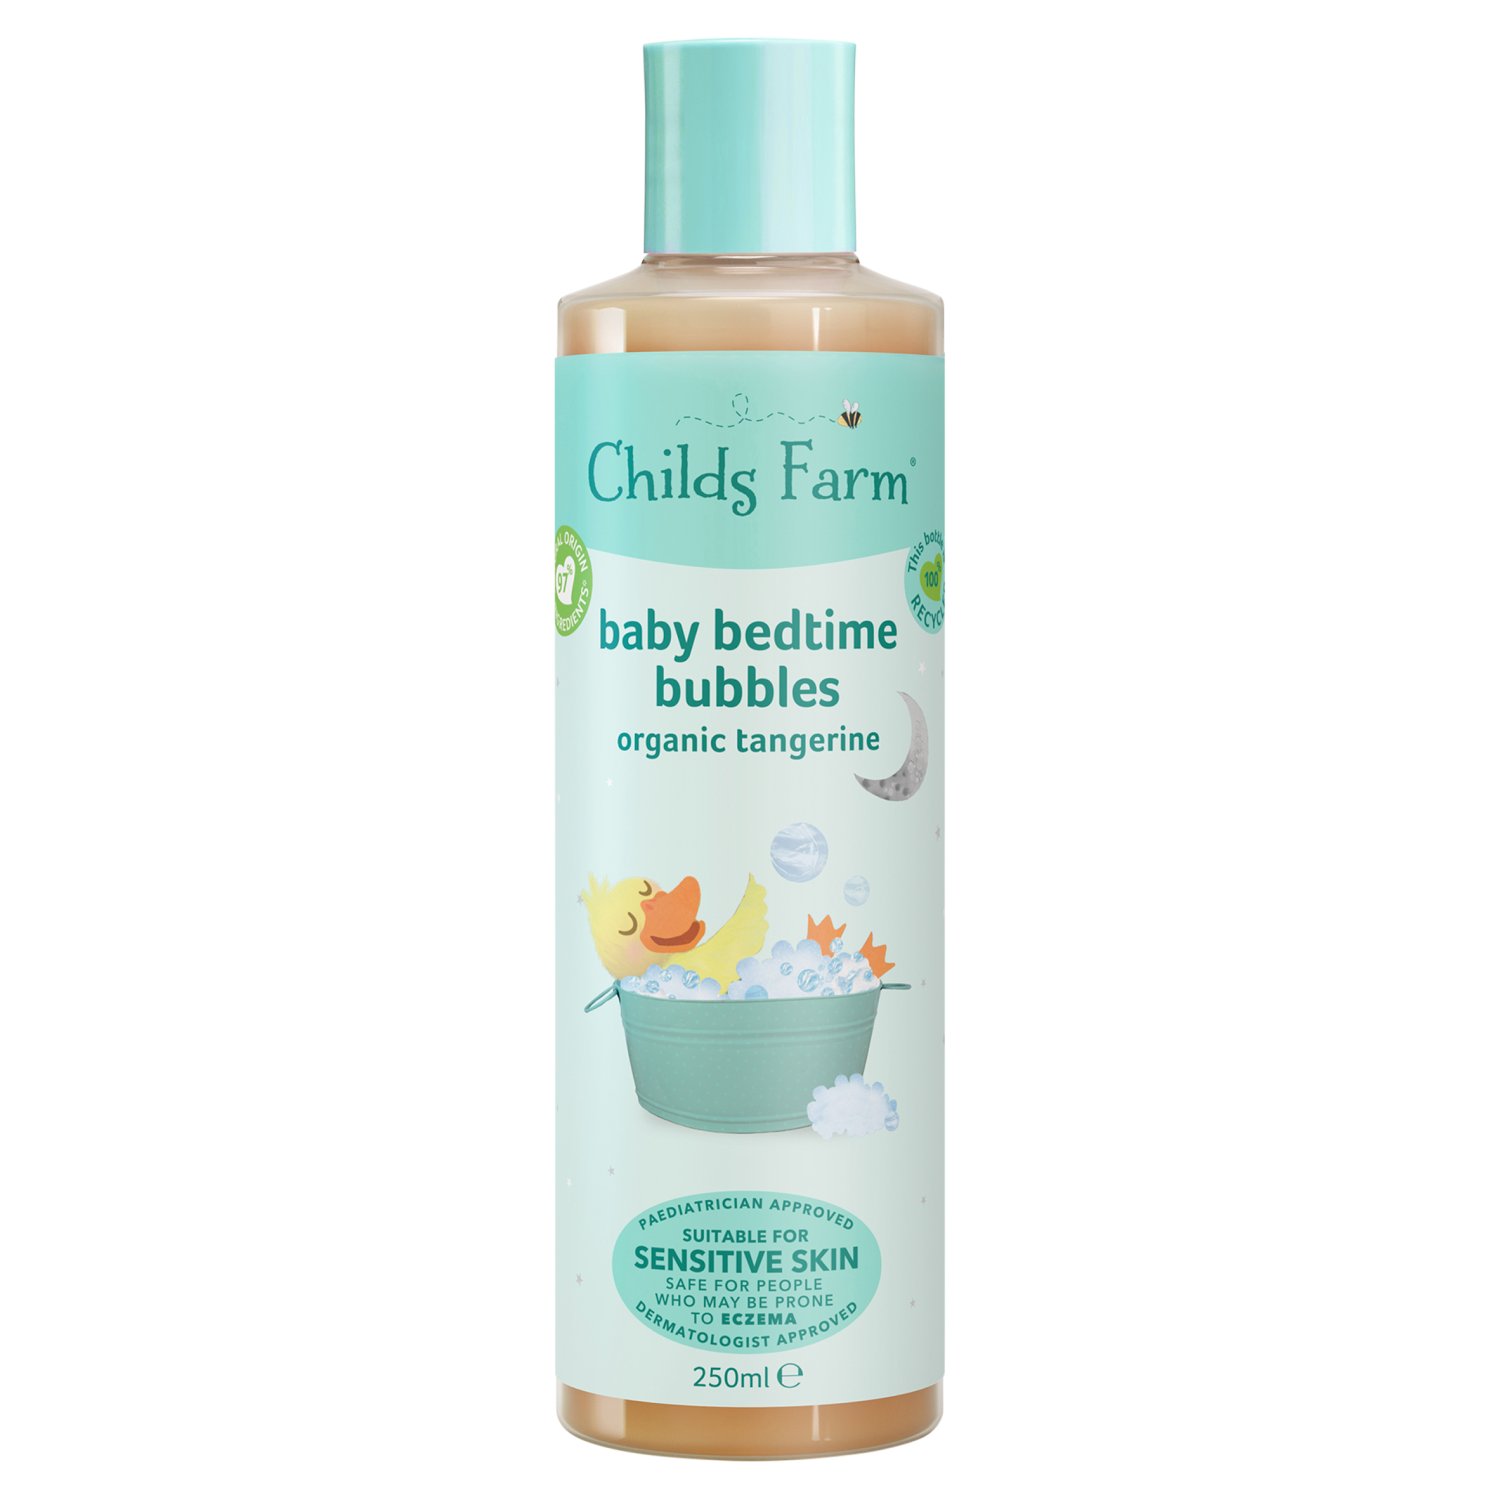 Childs Farm Baby Bedtime Bubbles Organic Tangerine Oil (250 ml)